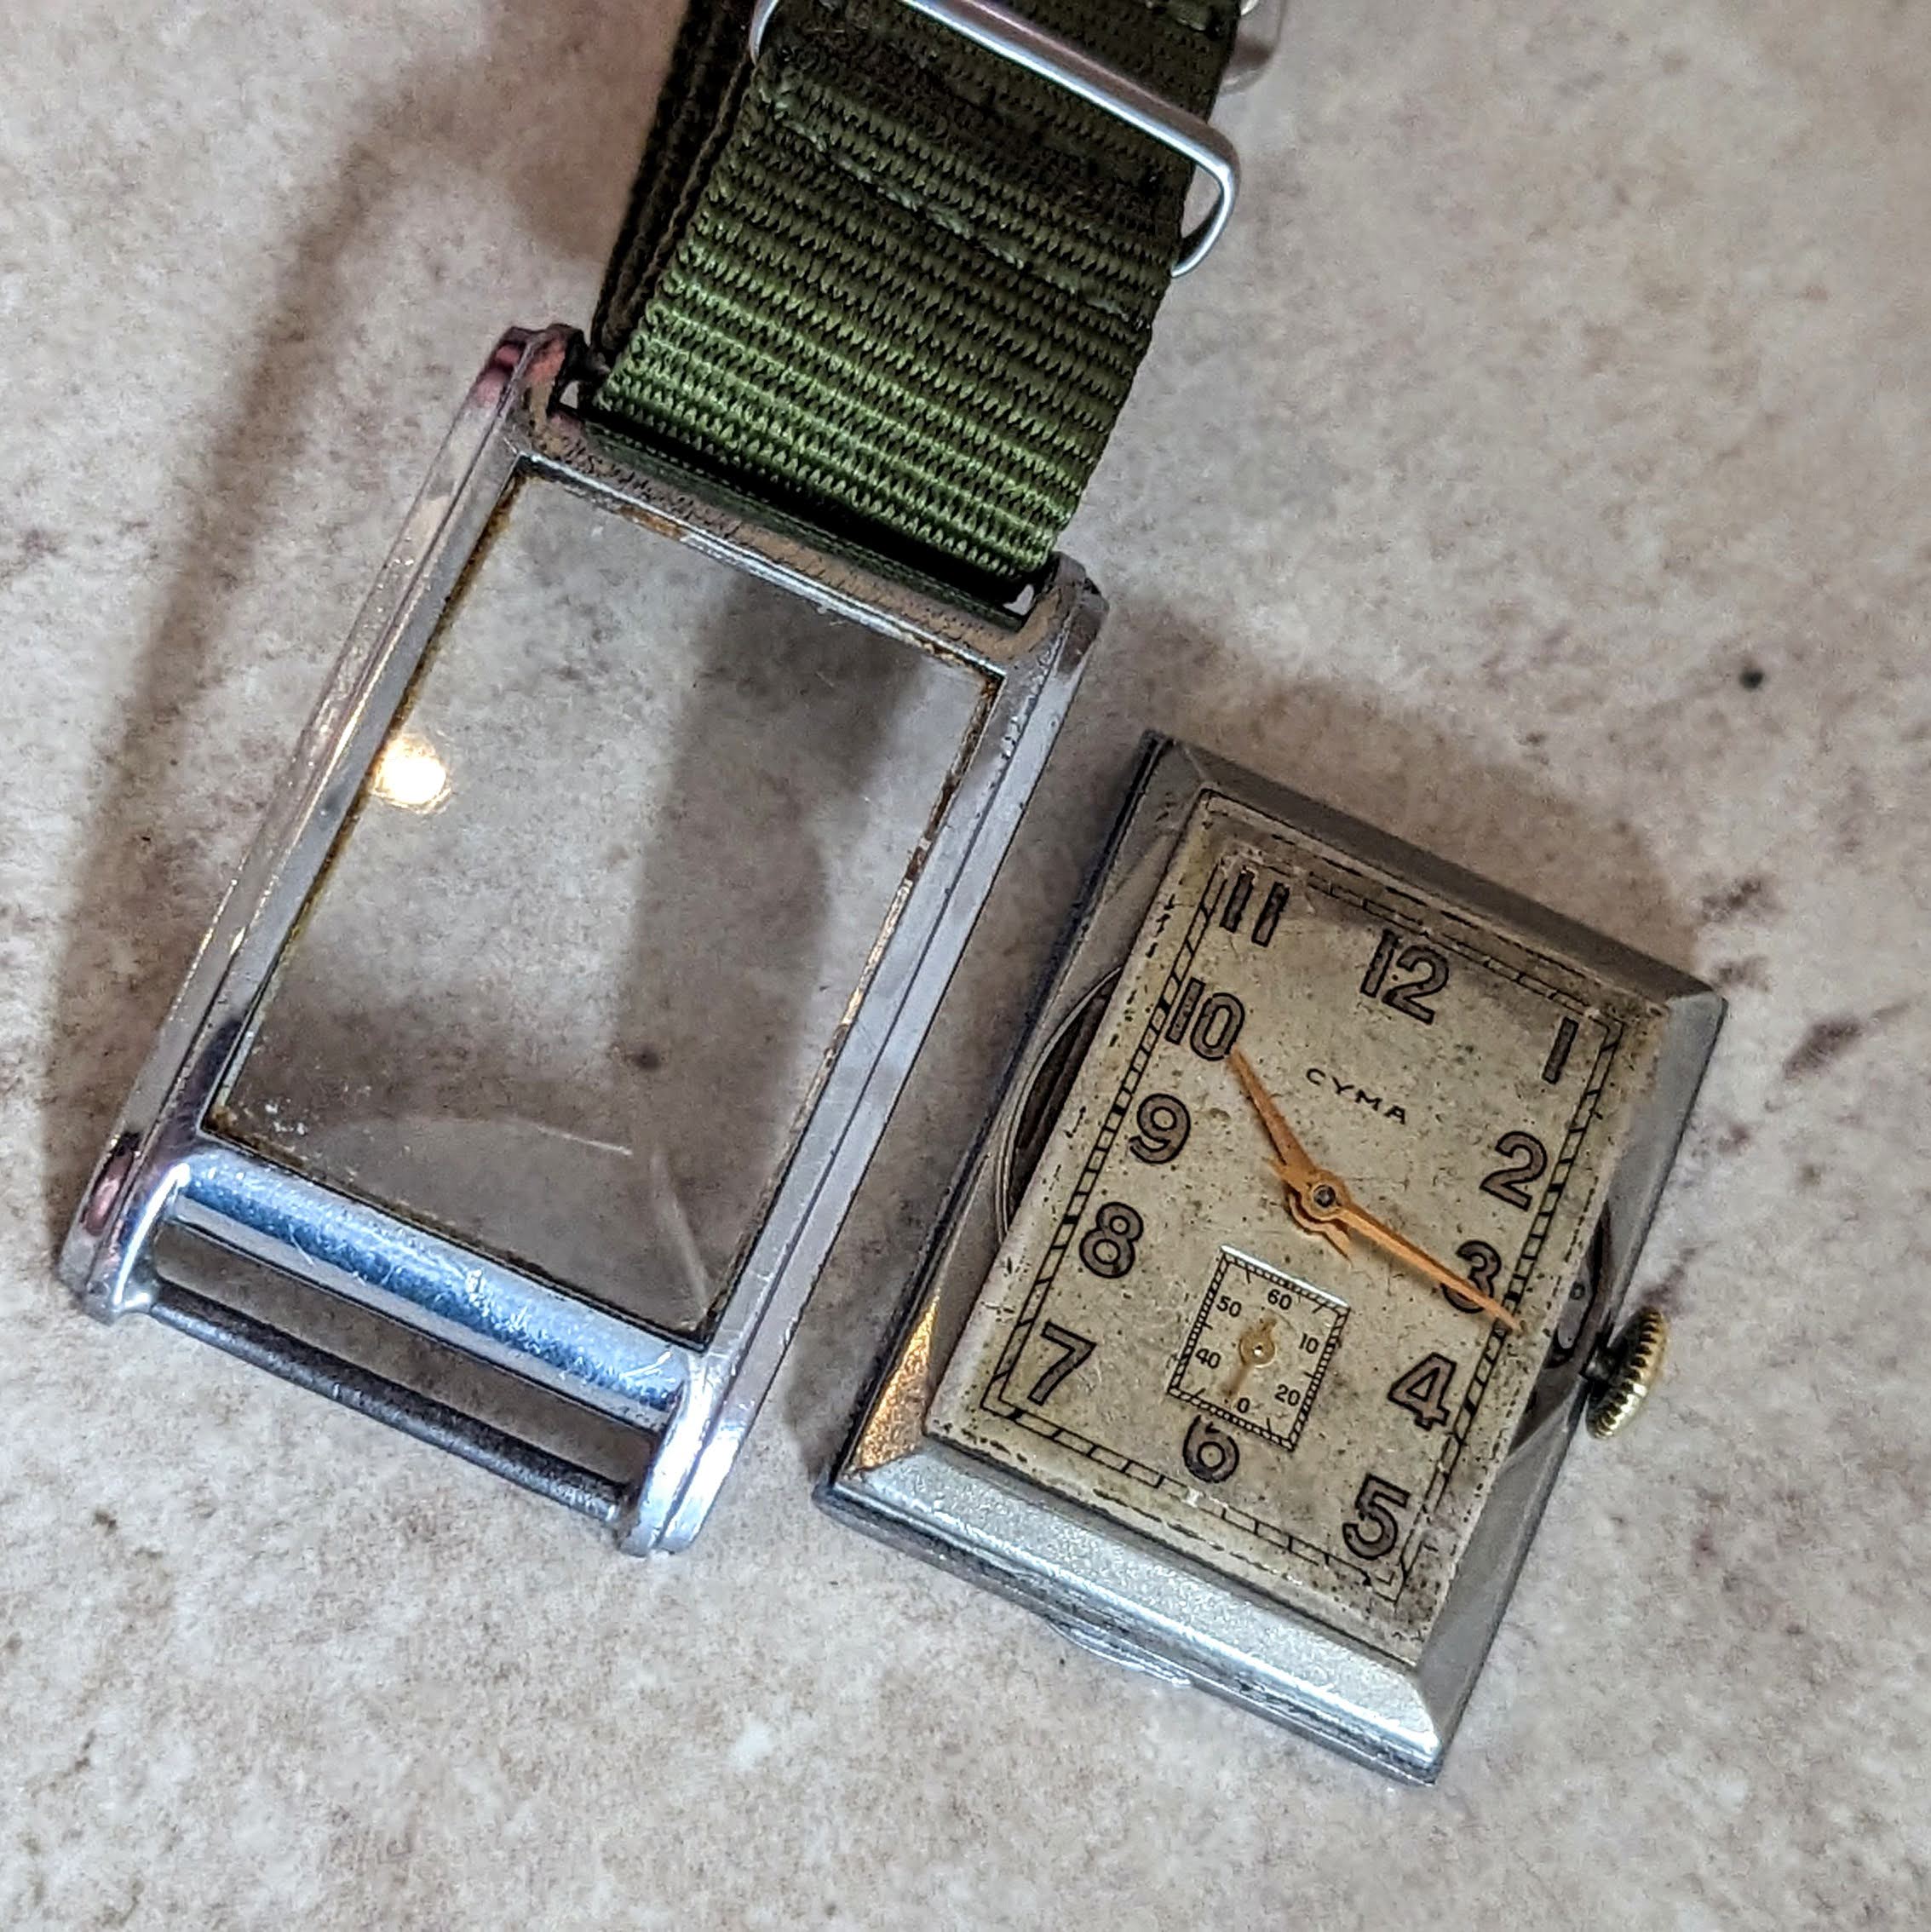 1940 CYMA Tank Case Wristwatch 15 Jewels Cal. Ref. 032D Swiss Made Watch